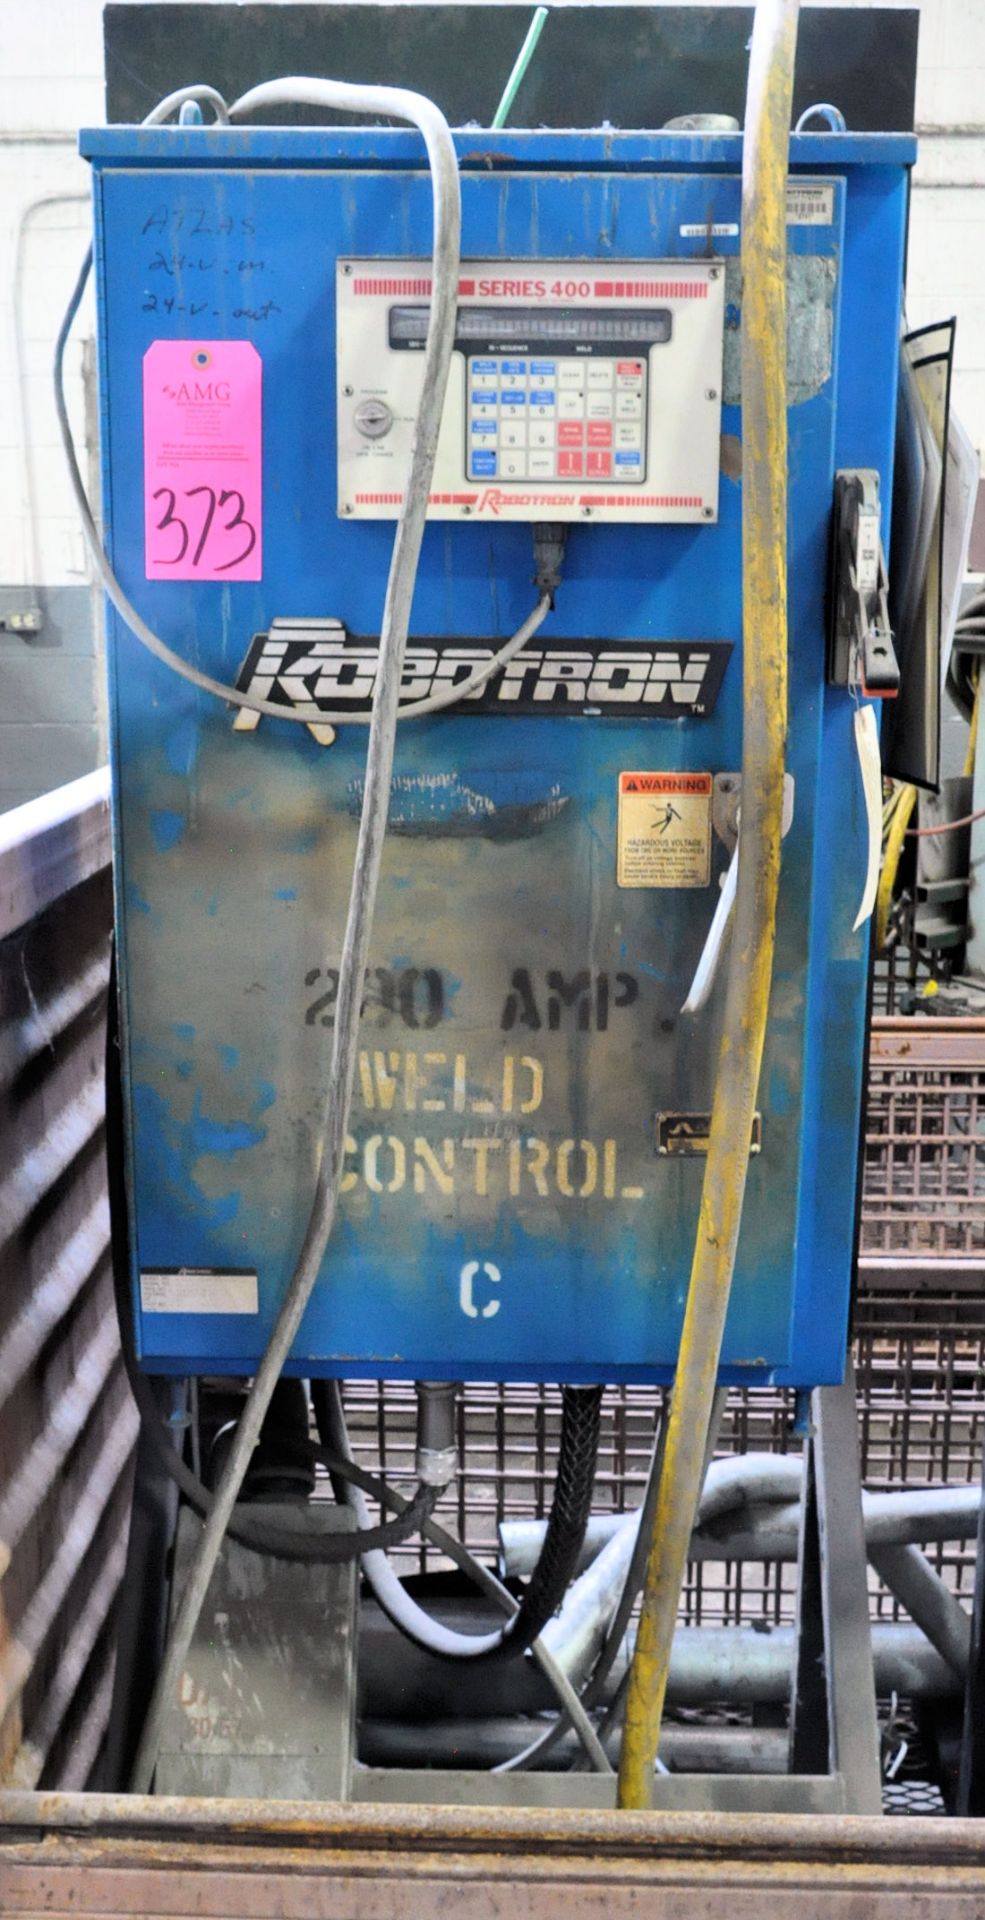 Robotron Series 400 Spot Welder Controller, (Warehouse Room), (Pink Tag)